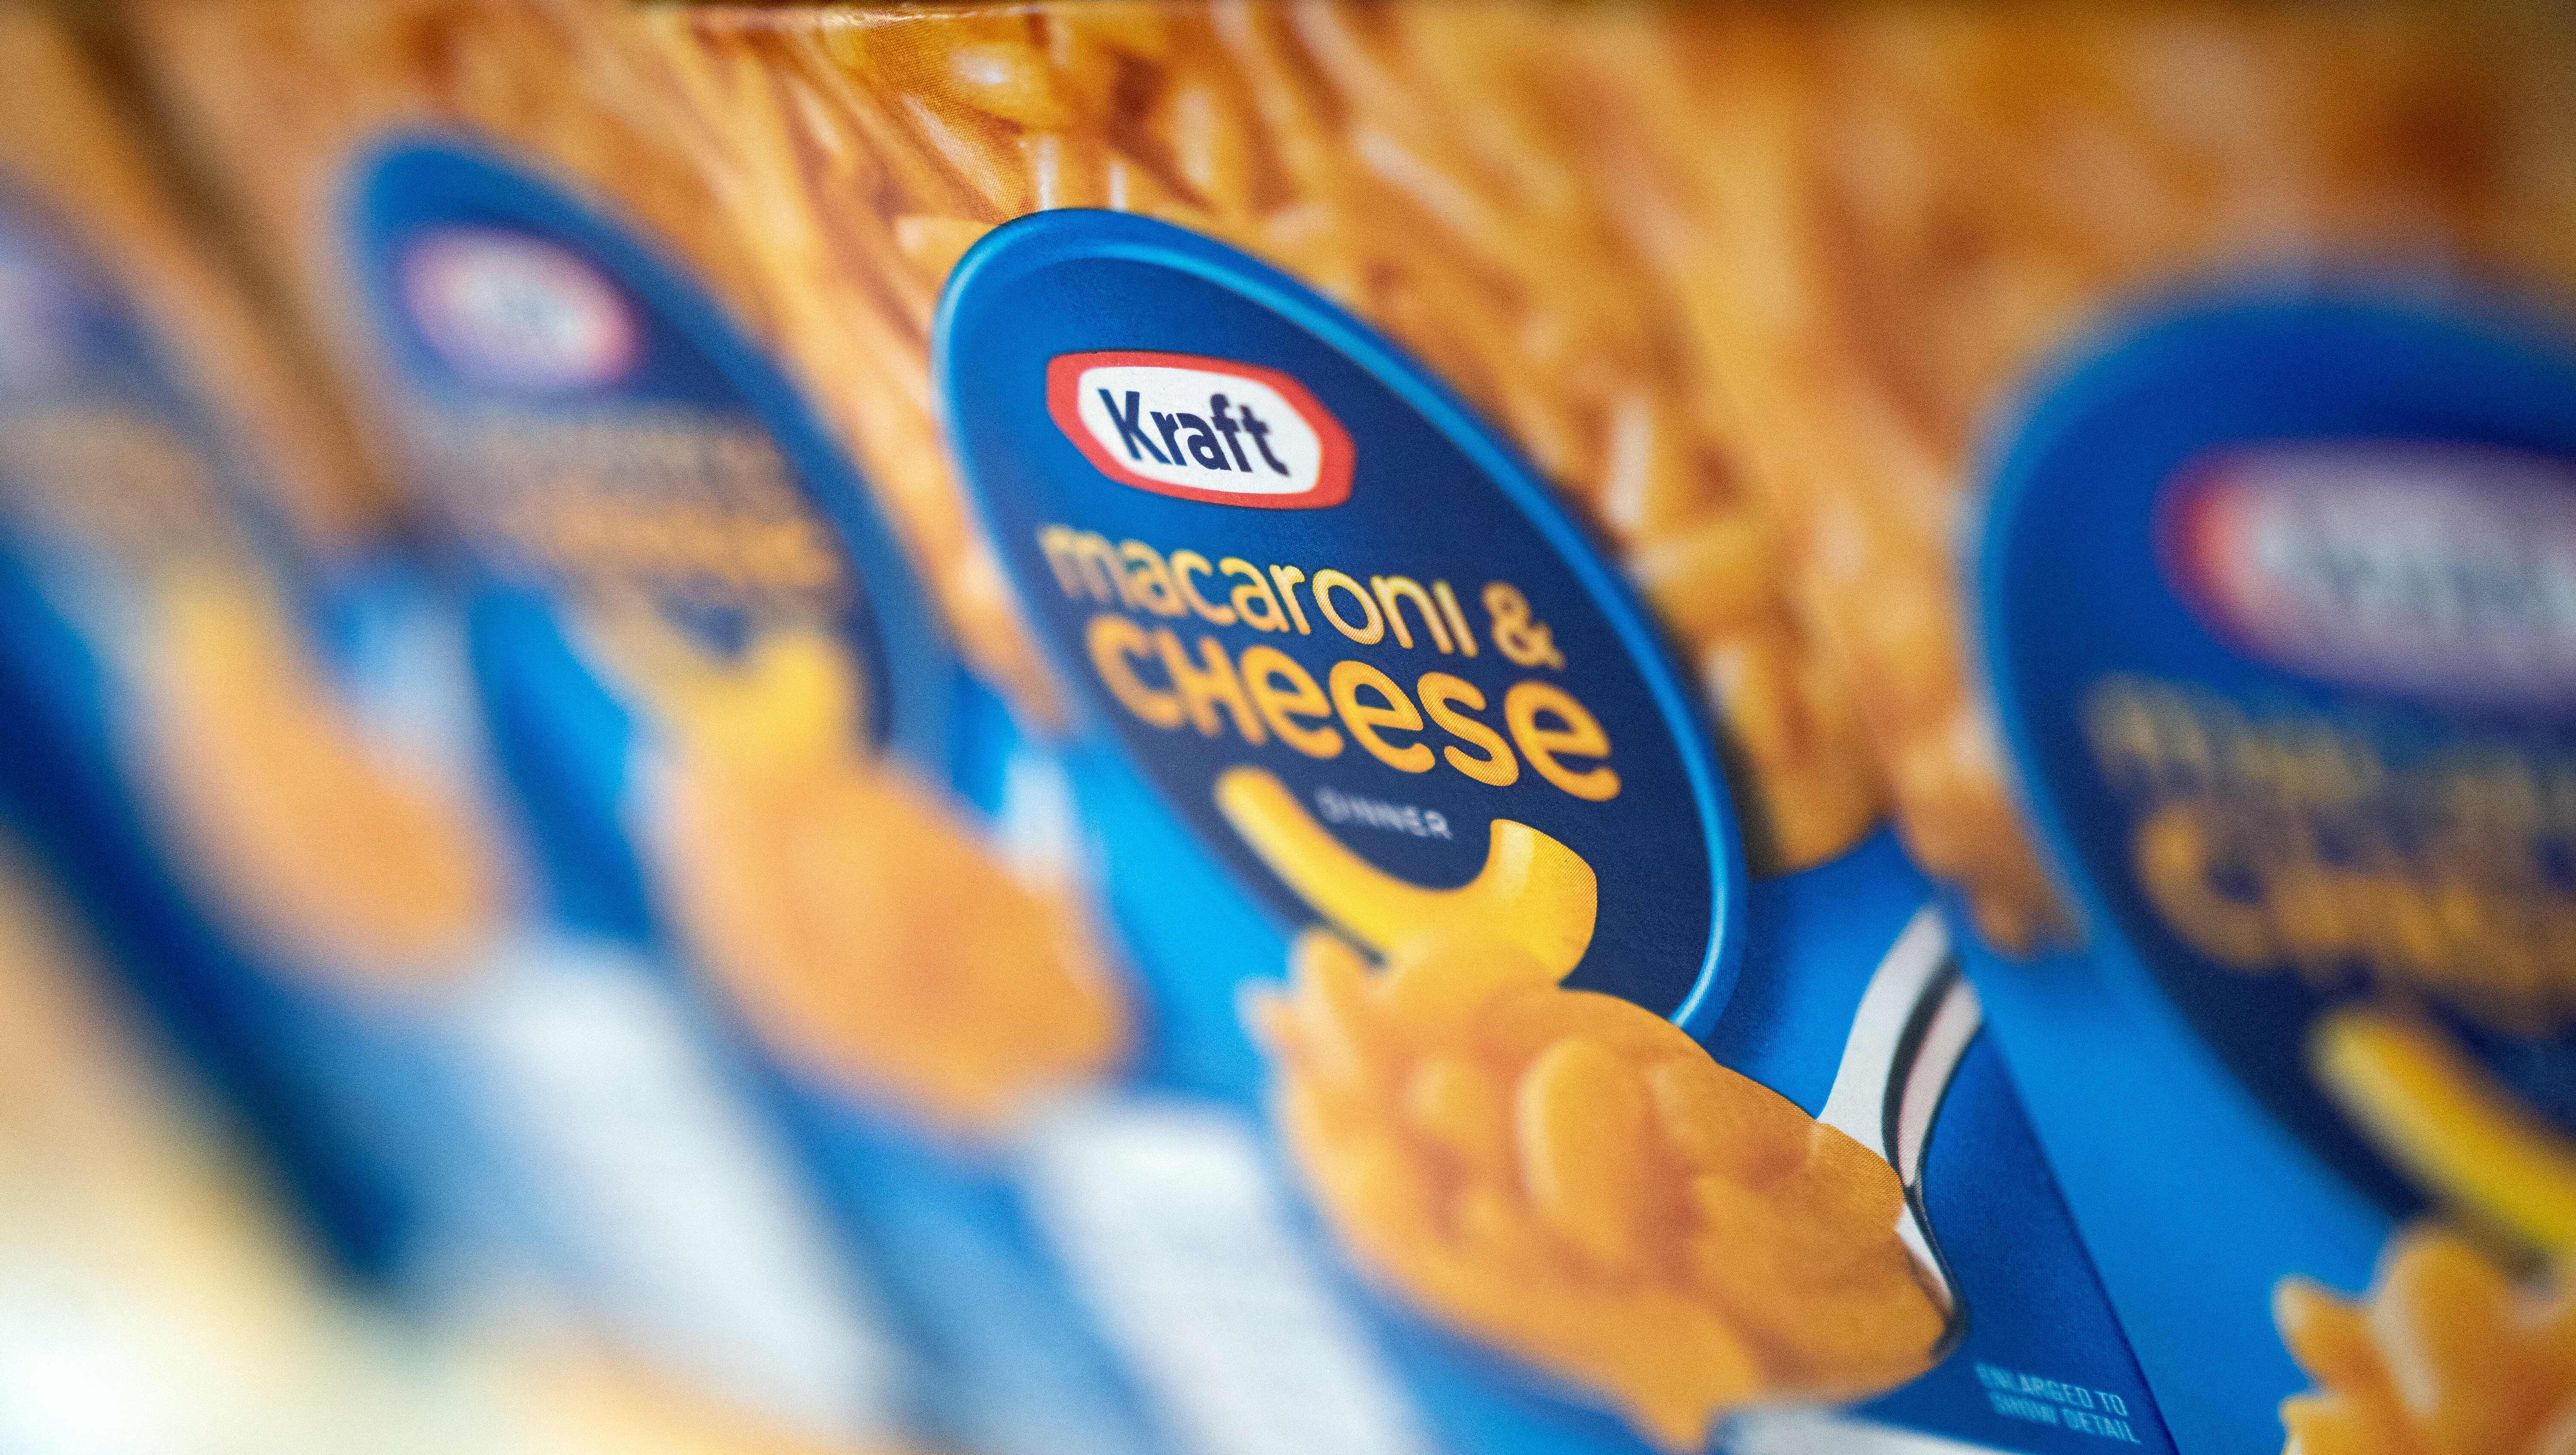 Kraft Announces The Return of "Spongebob Squarepants" Mac N Cheese